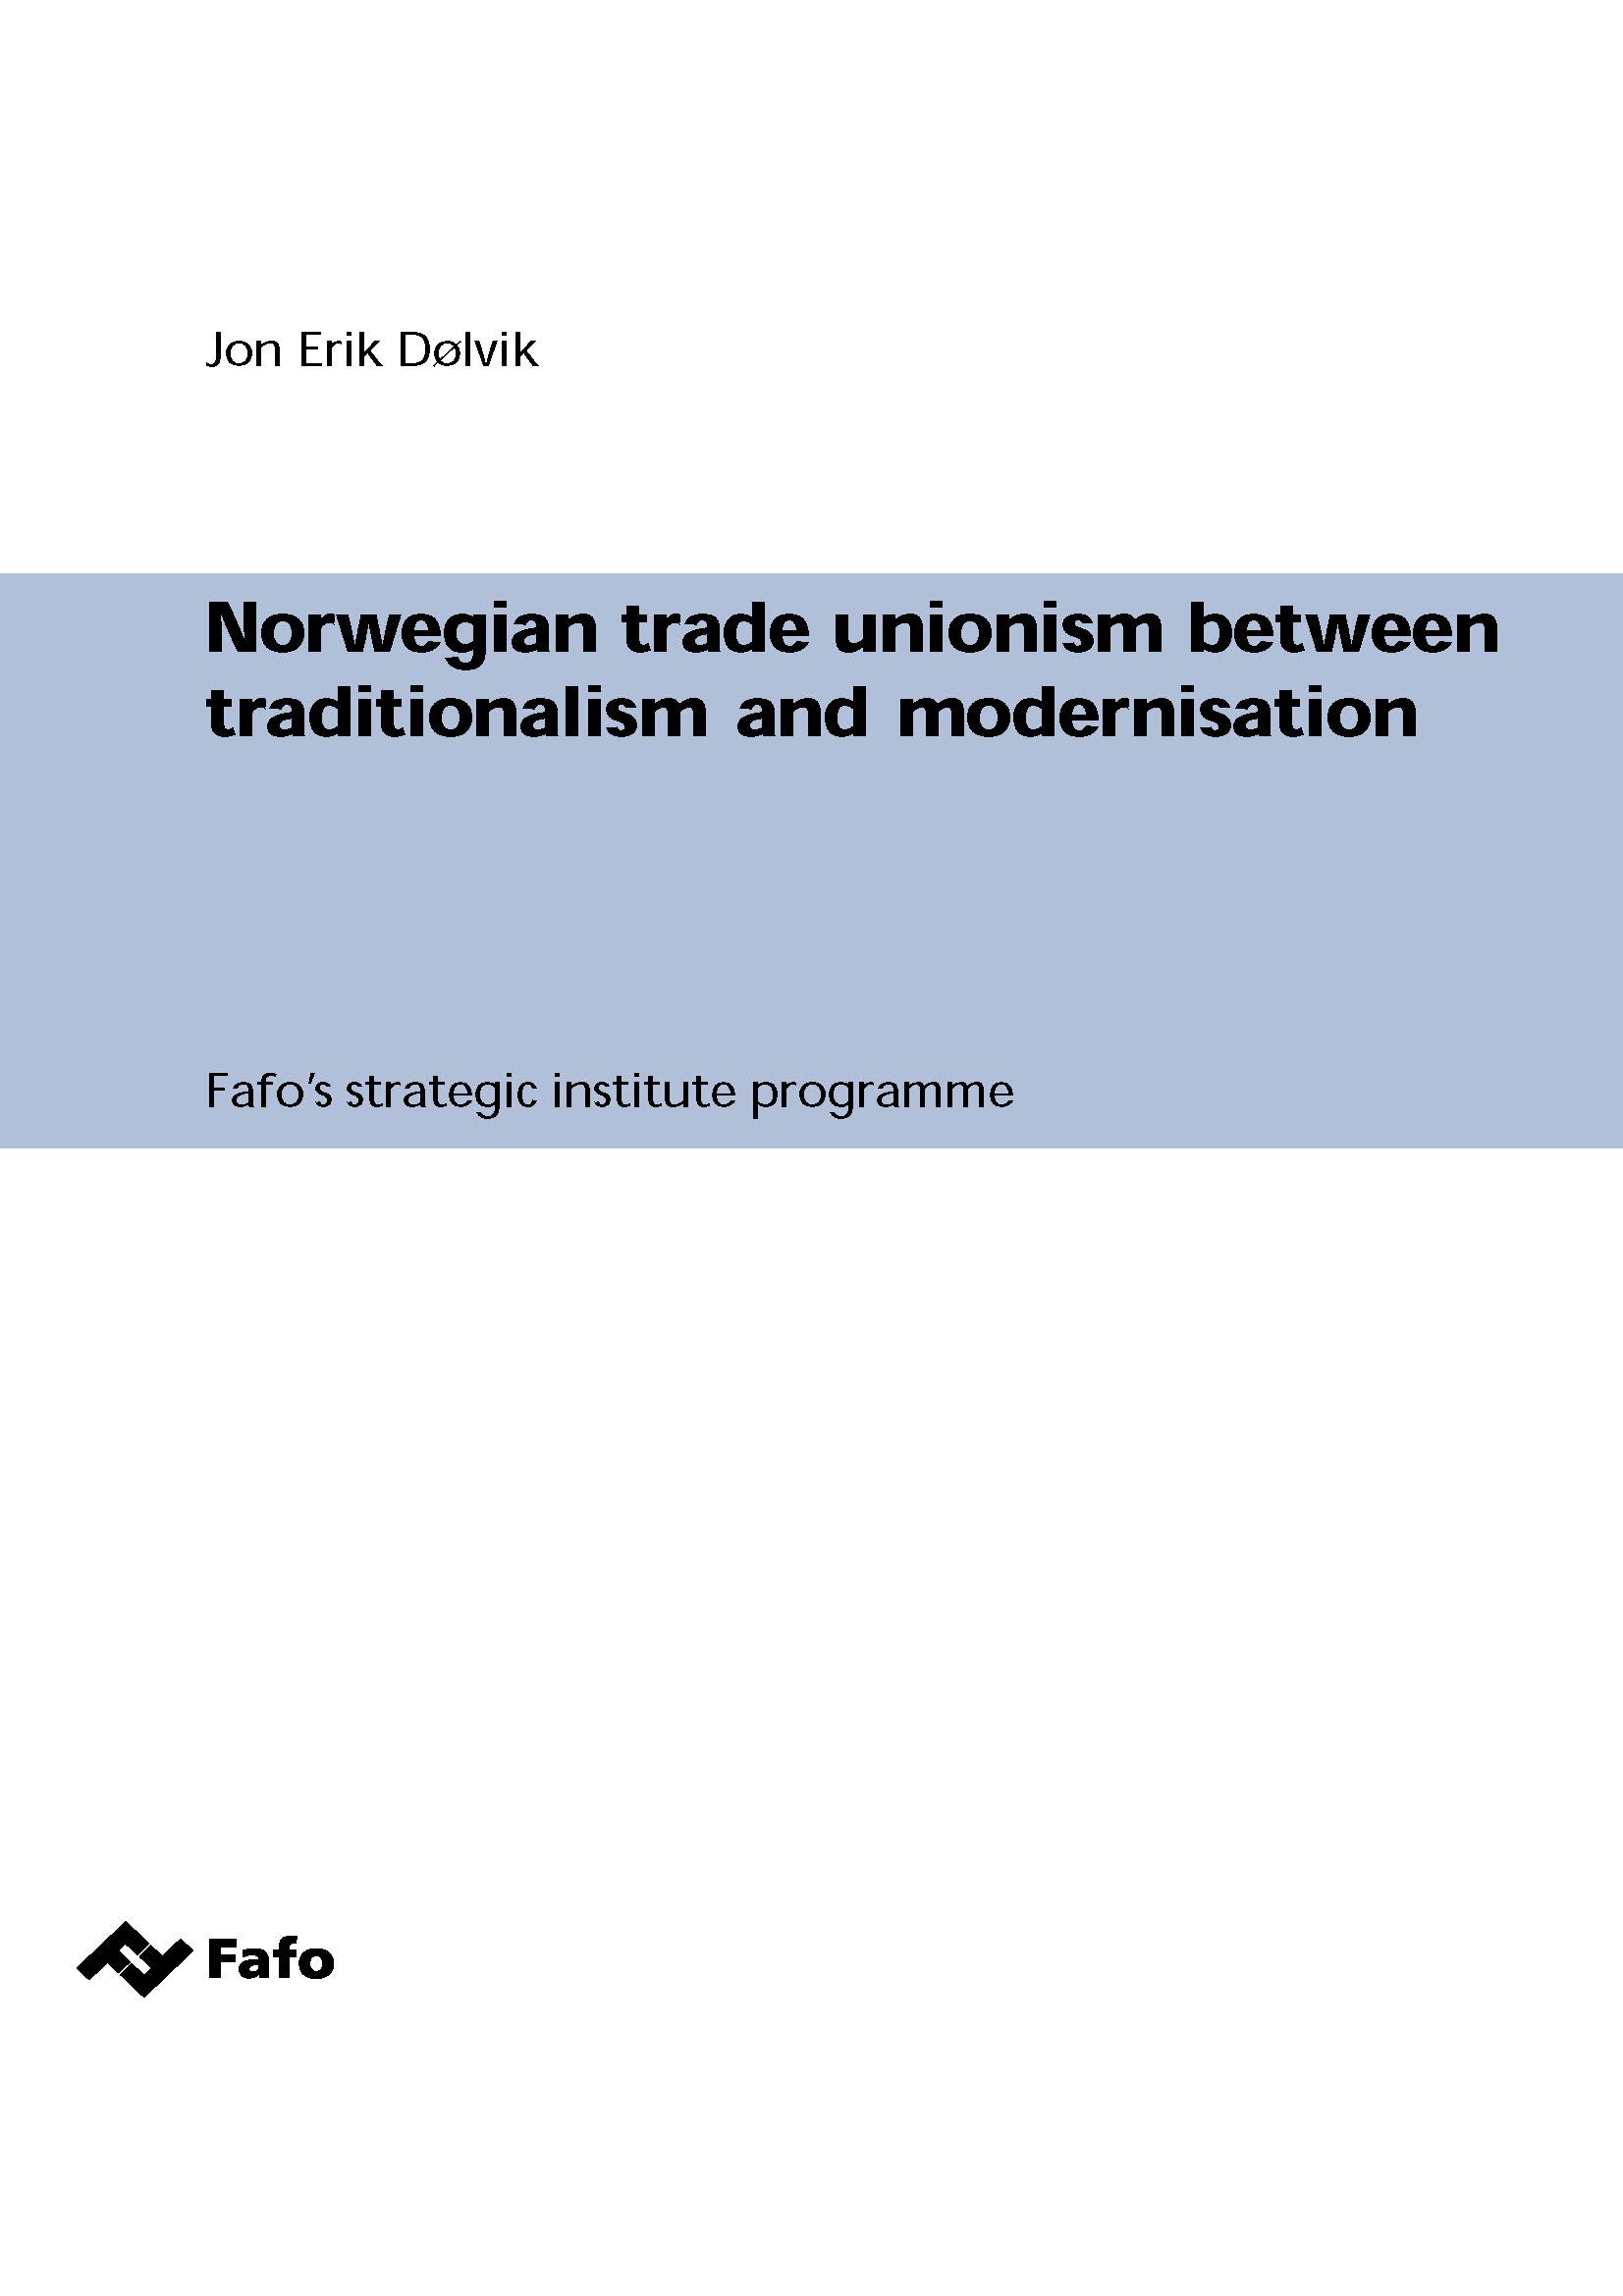 Norwegian trade unionism between traditionalism and modernisation